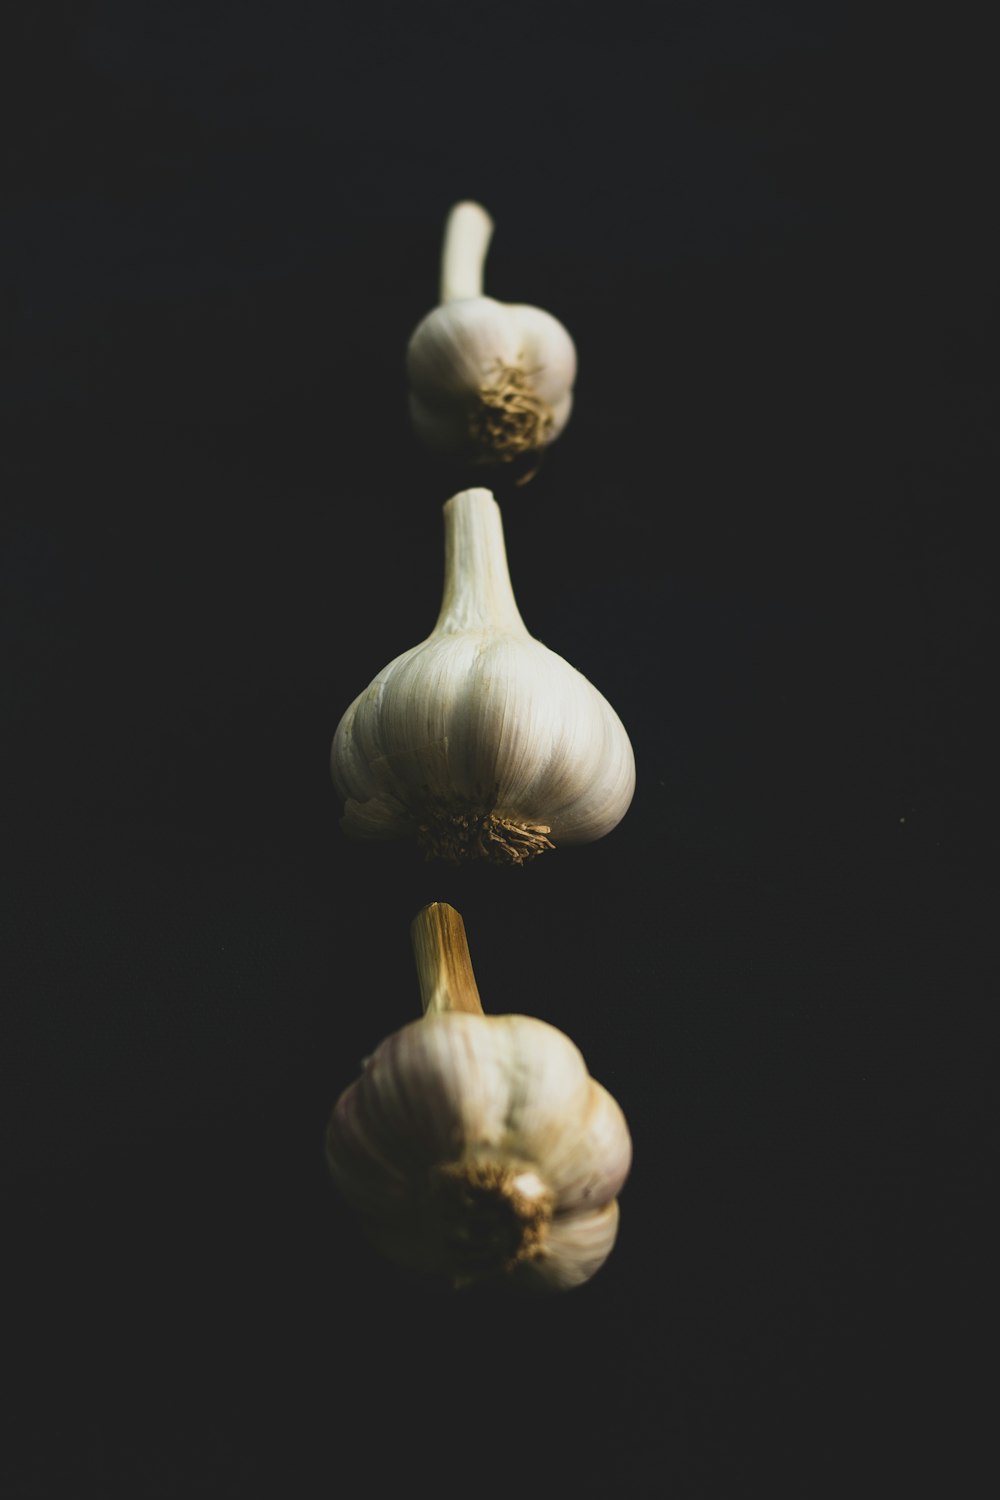 garlic bulb on black surface